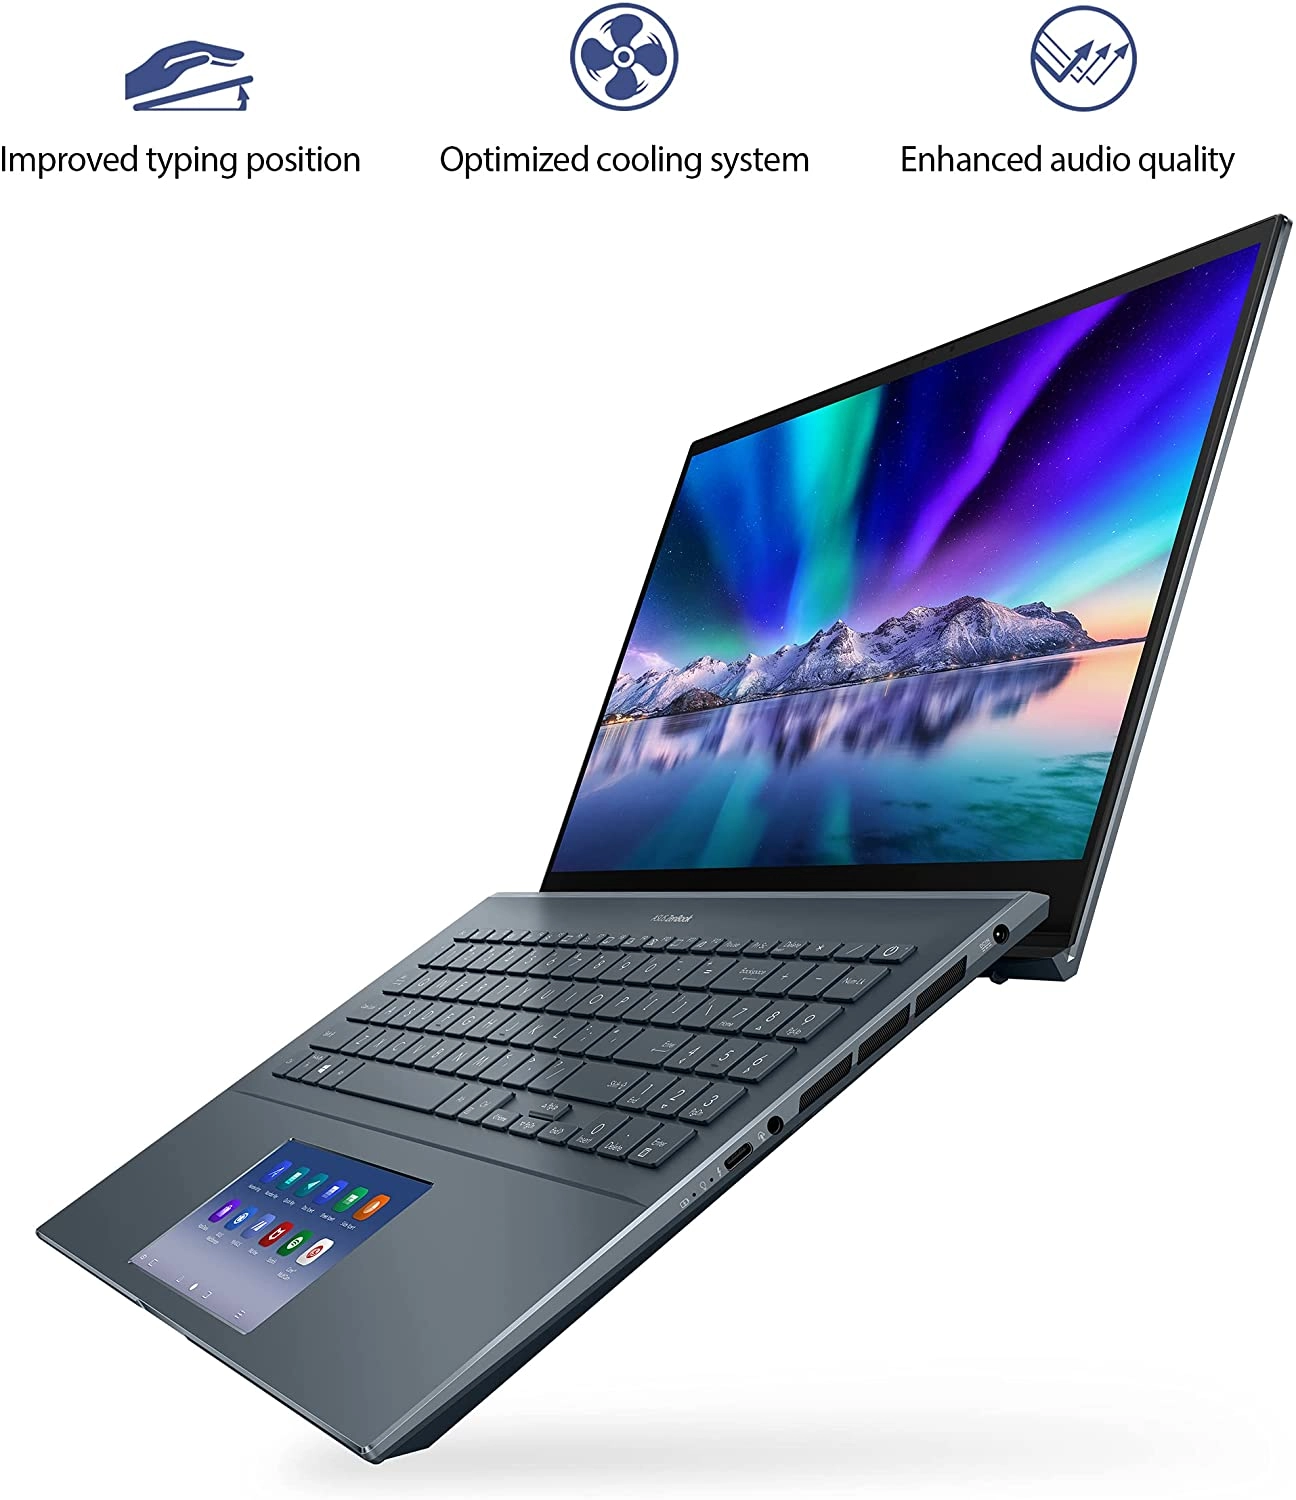 Asus ZenBook laptop image